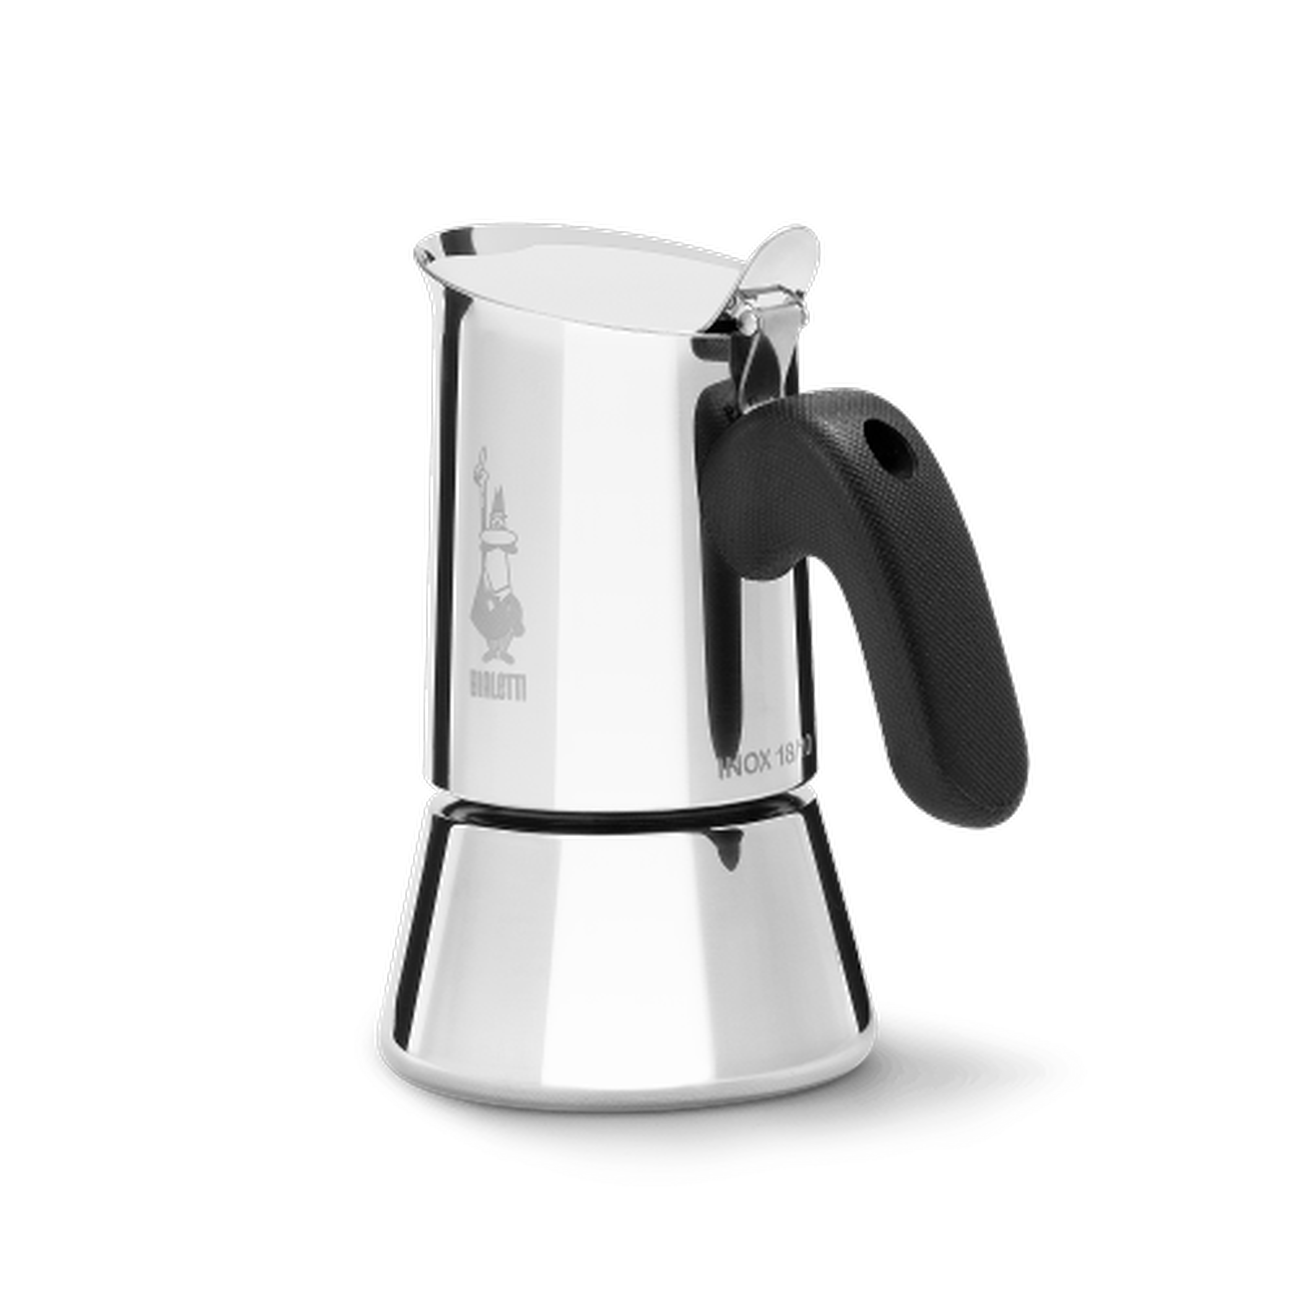 Bialetti Venus Induction espresso maker, 6 cups, steel